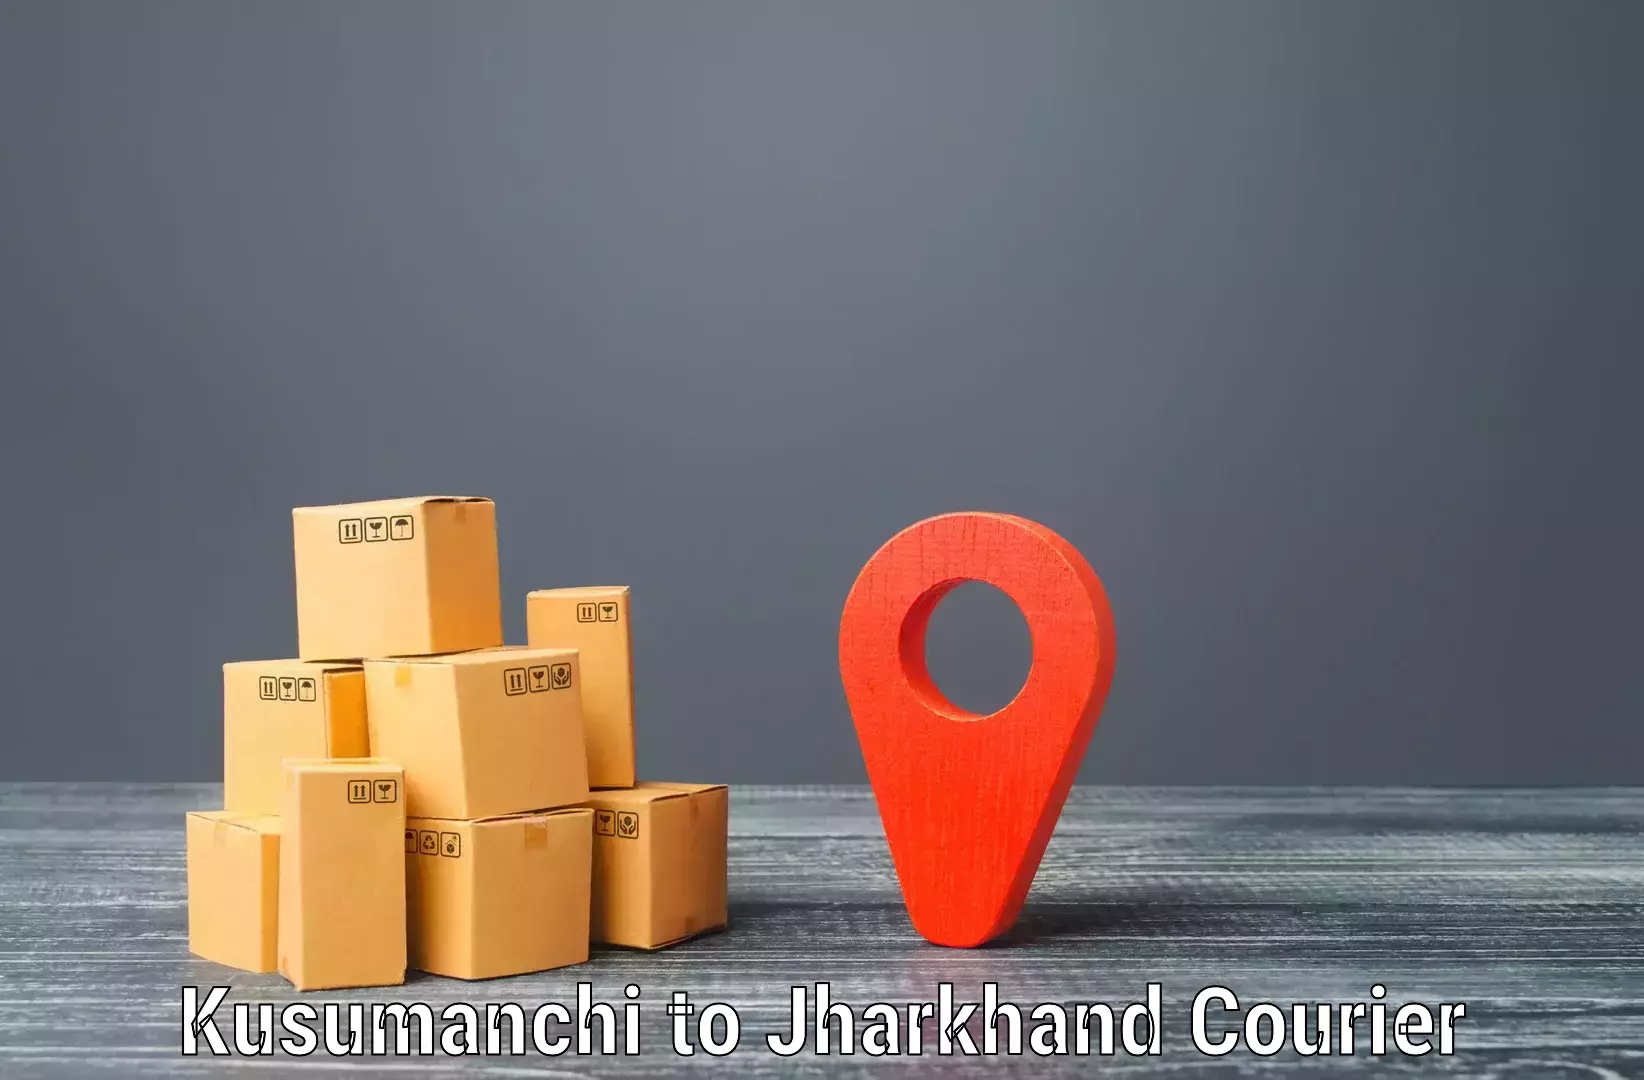 Doorstep delivery service Kusumanchi to Ranchi